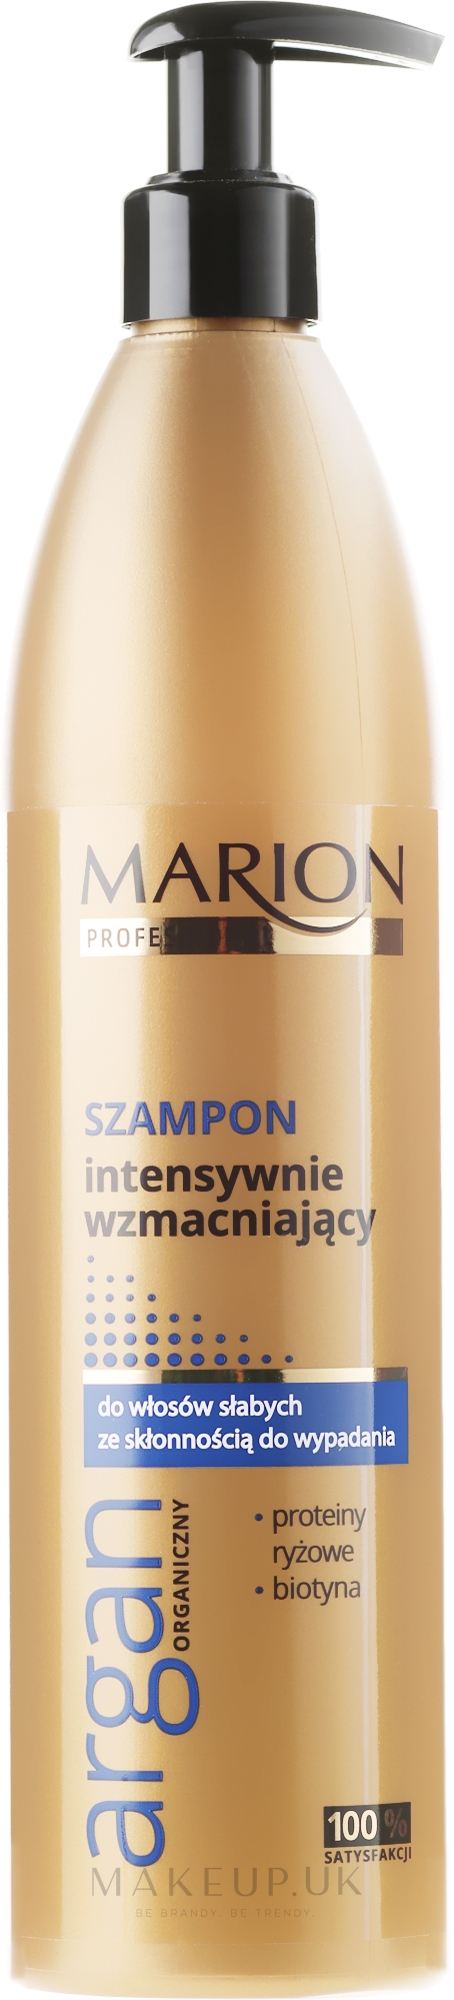 marion professional szampon